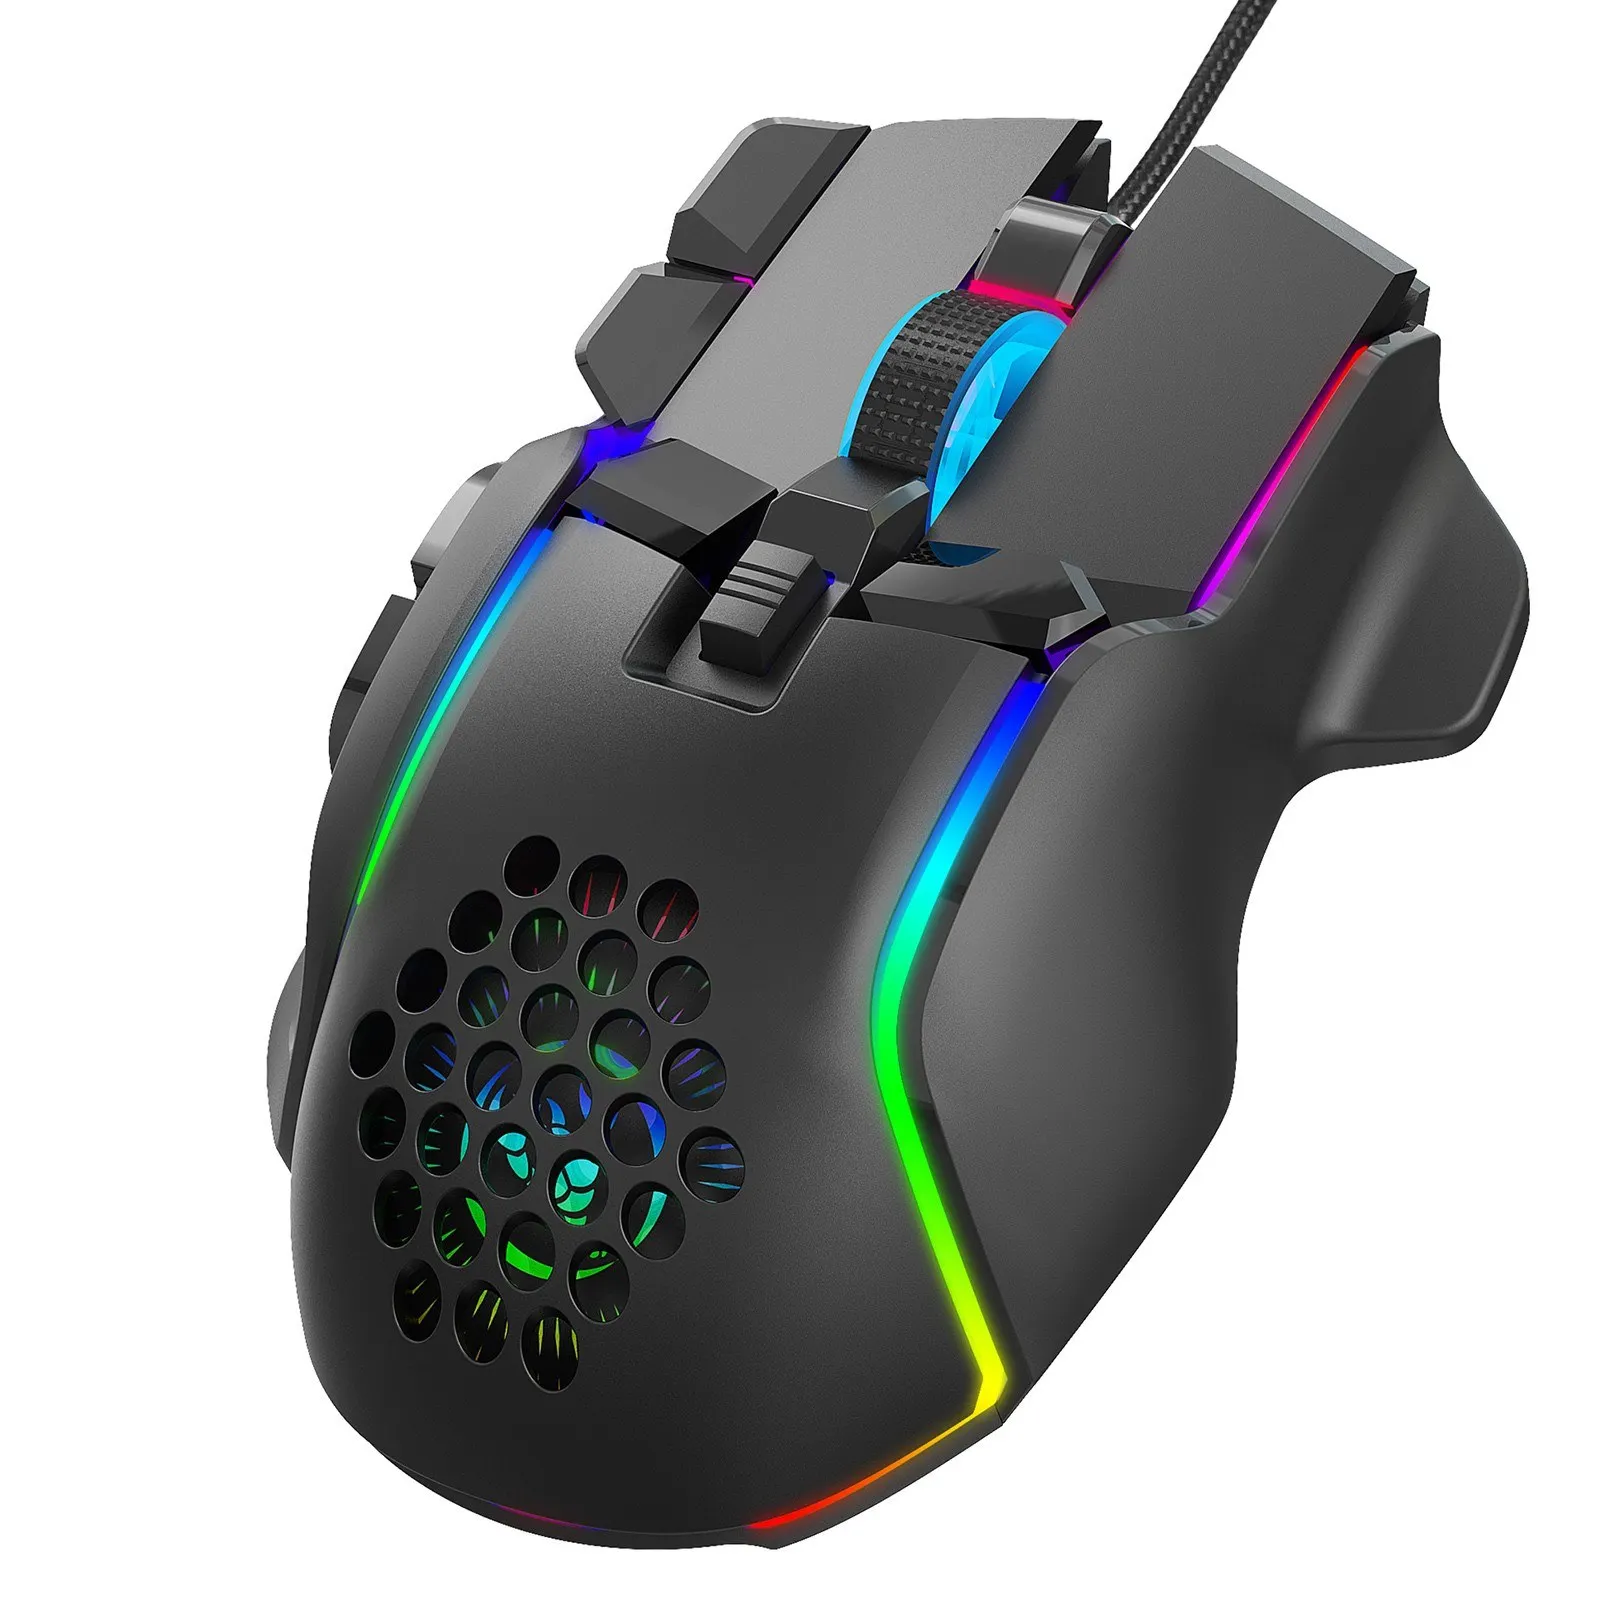 

HXSJ S700 10 Keys USB Wire Gaming Mouse Macro Programming Ergonomic Mice with 6 Adjustable DPI RGB Light Effect Gamer Mice